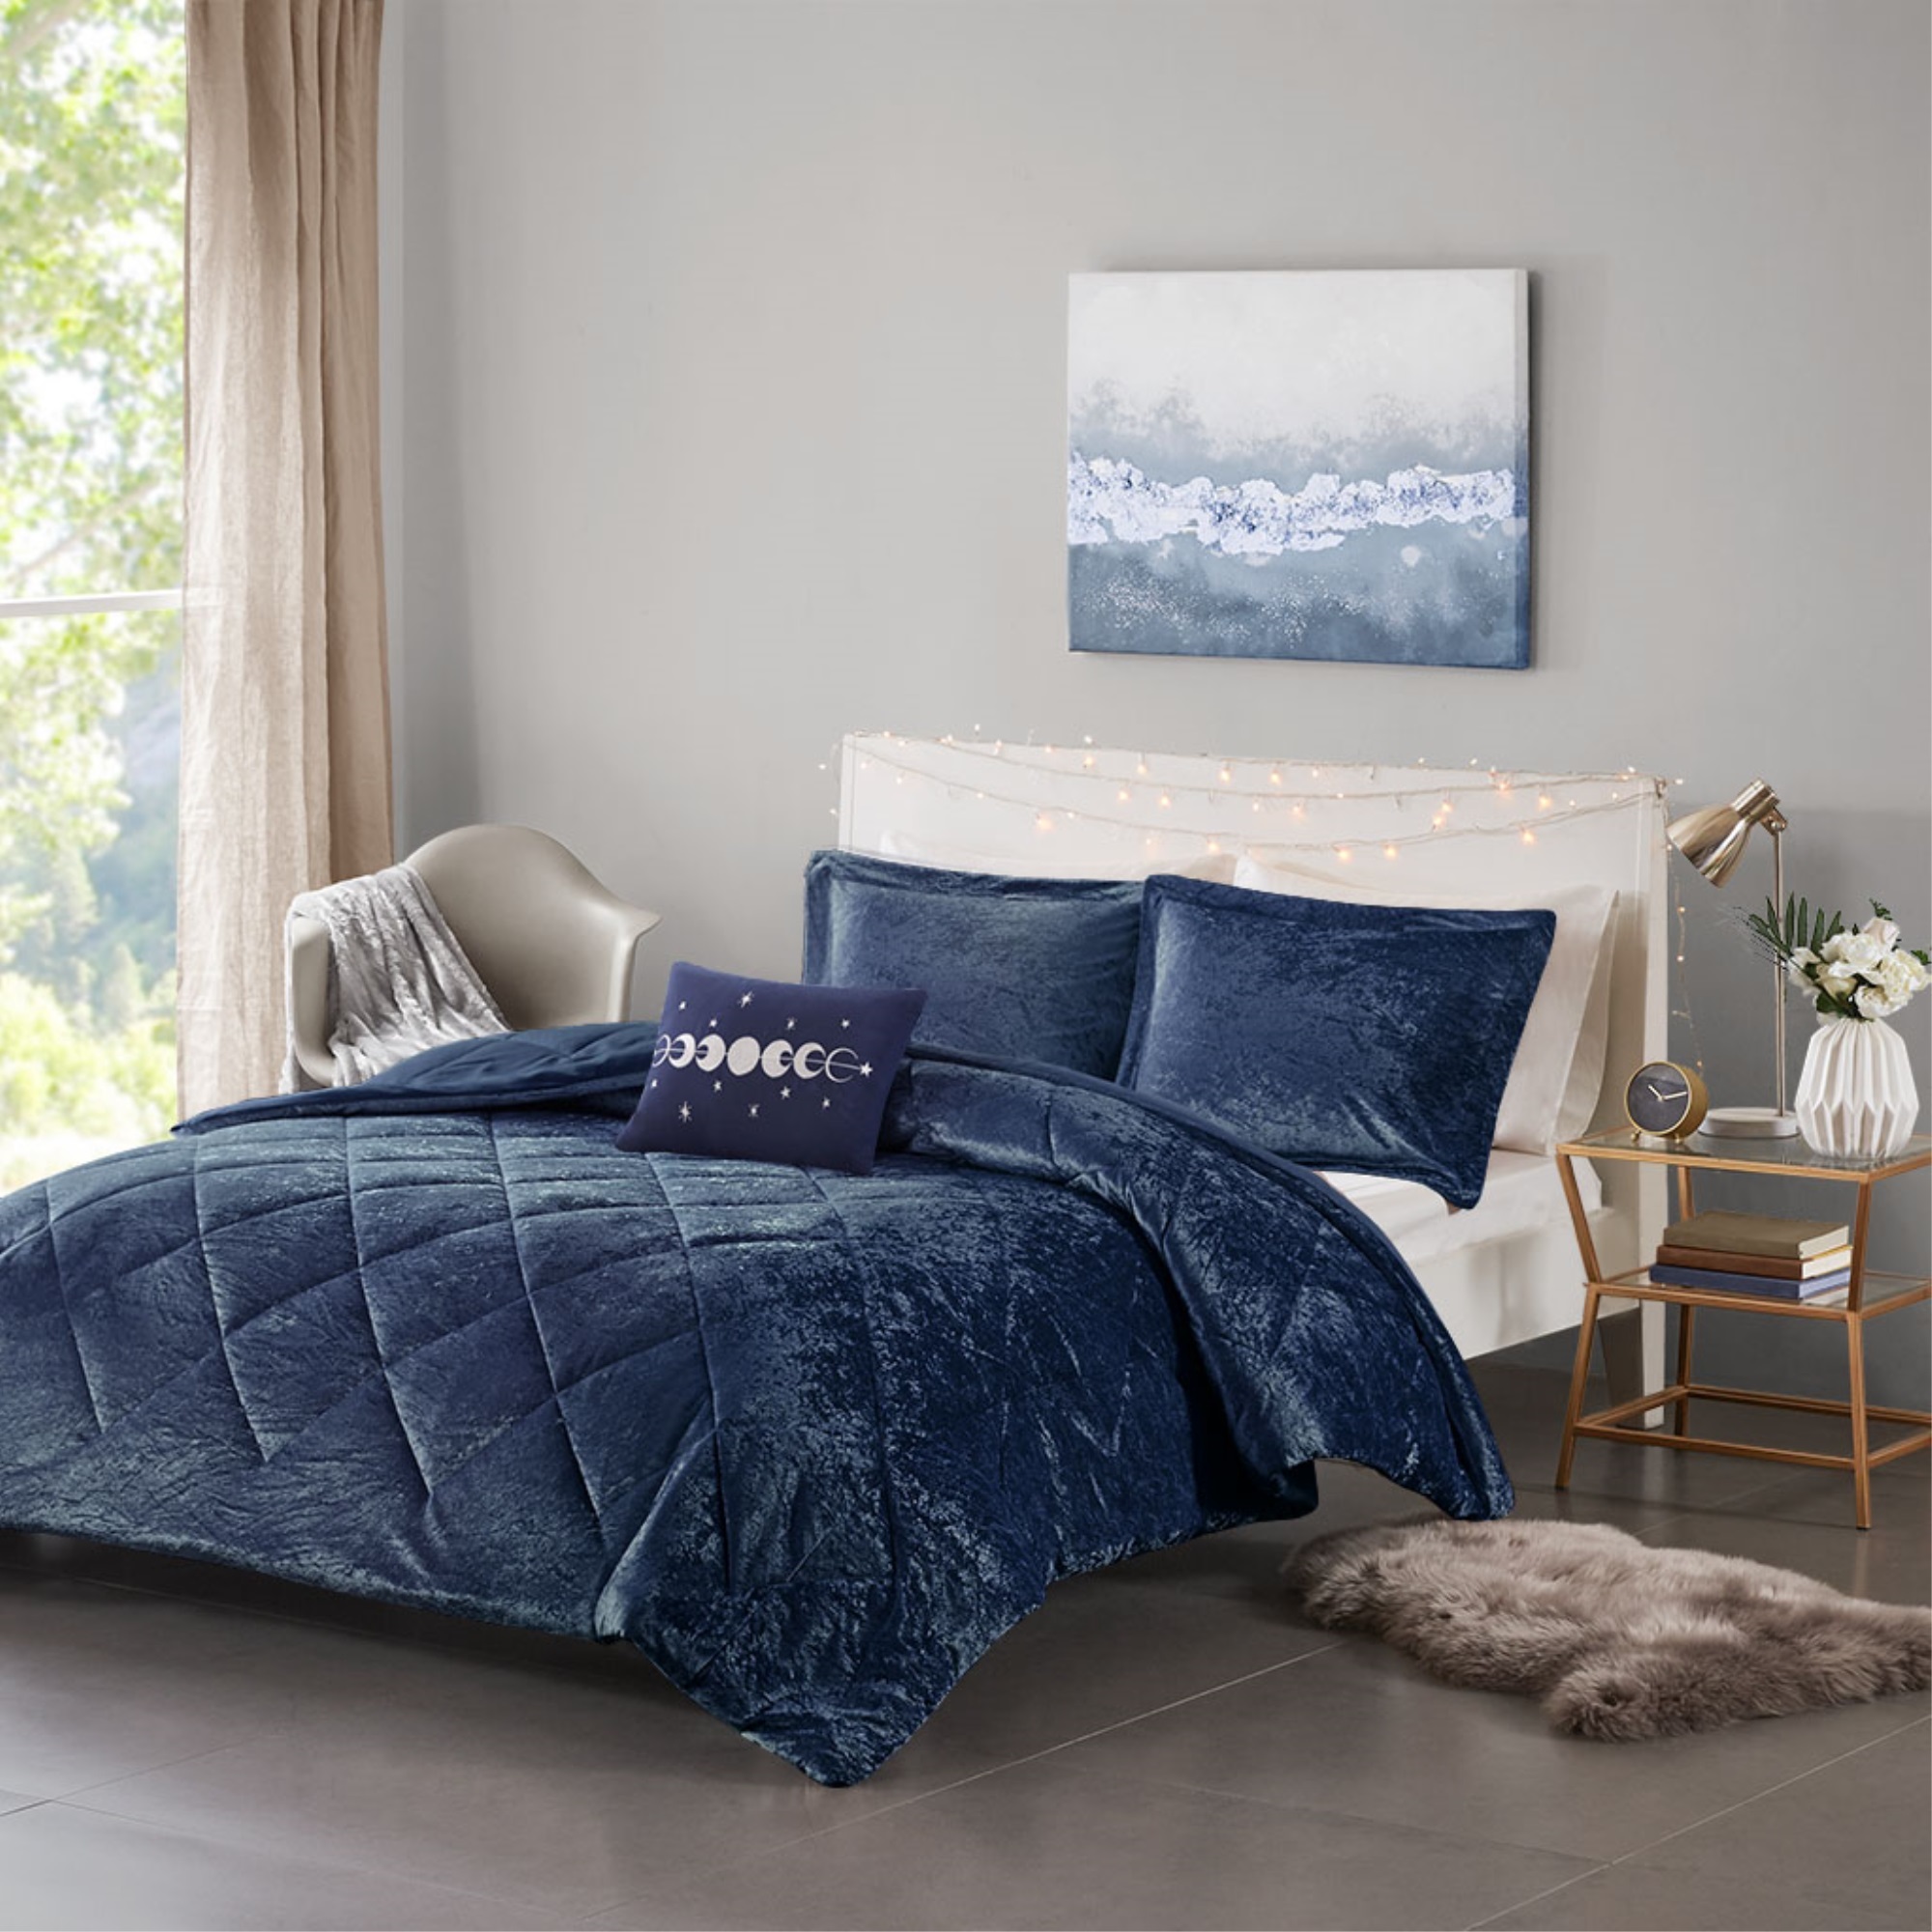 Ergode Velvet Comforter Set - Navy, Diamond Quilted, Hypoallergenic, Machine Washable - Transform Your Bedroom into a Se